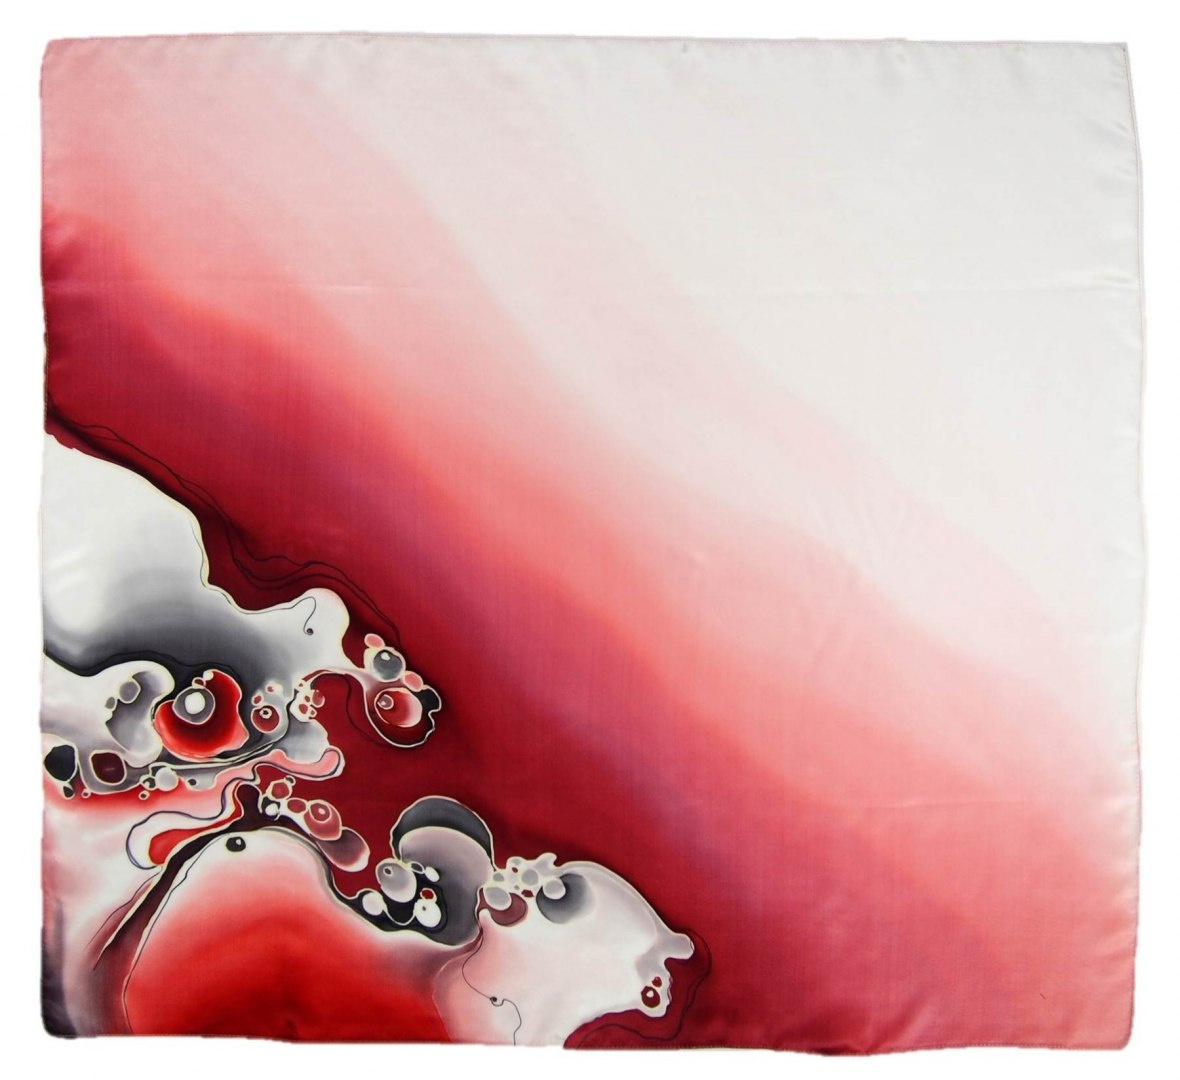 AM-453 Hand-painted silk scarf, 90x90cm